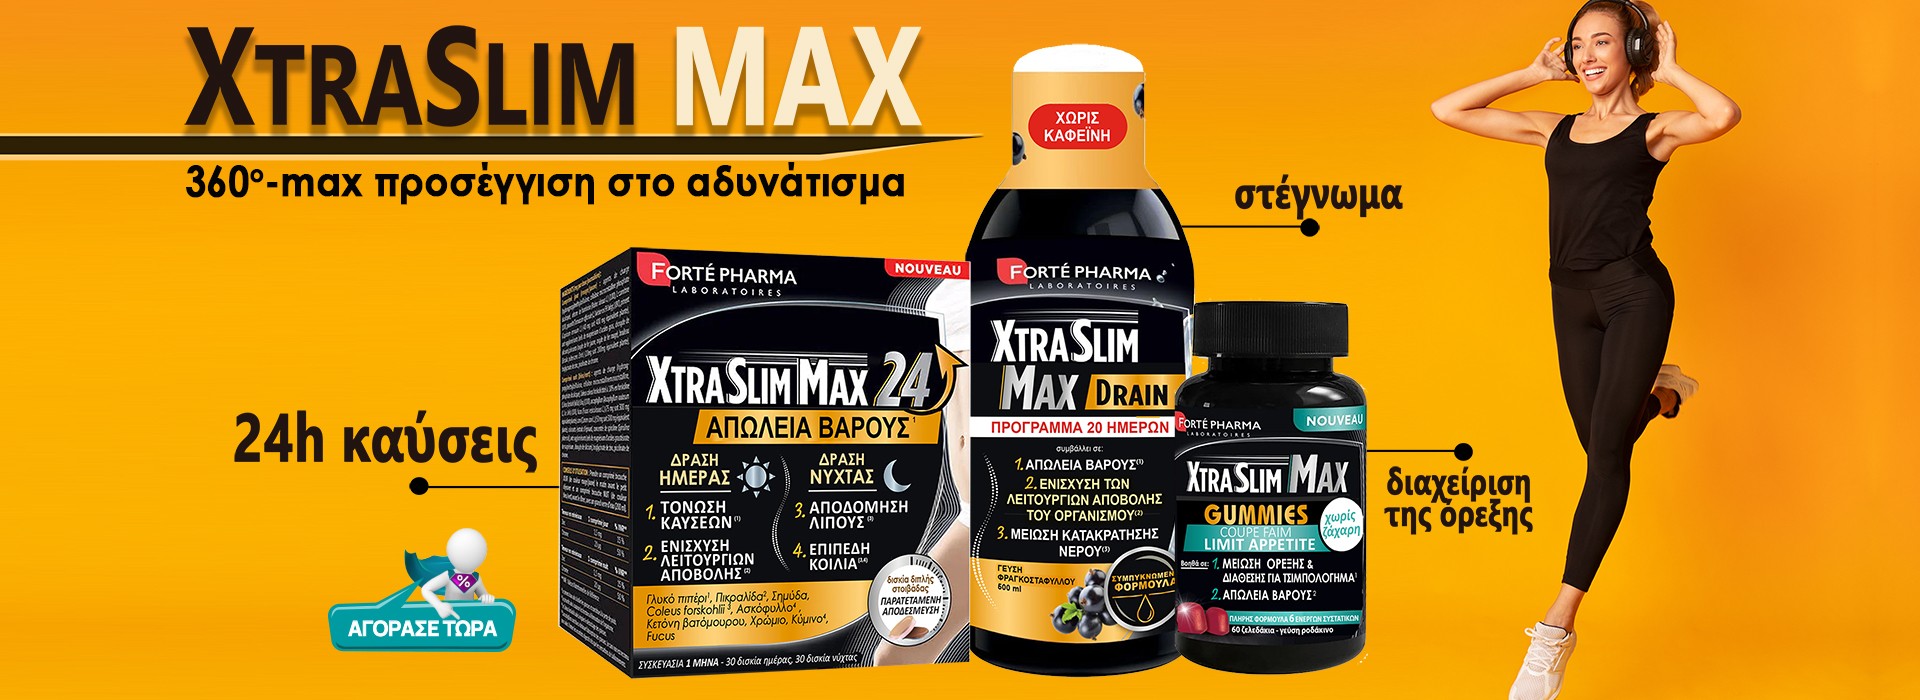 Forte Pharma XtraSlim Max May